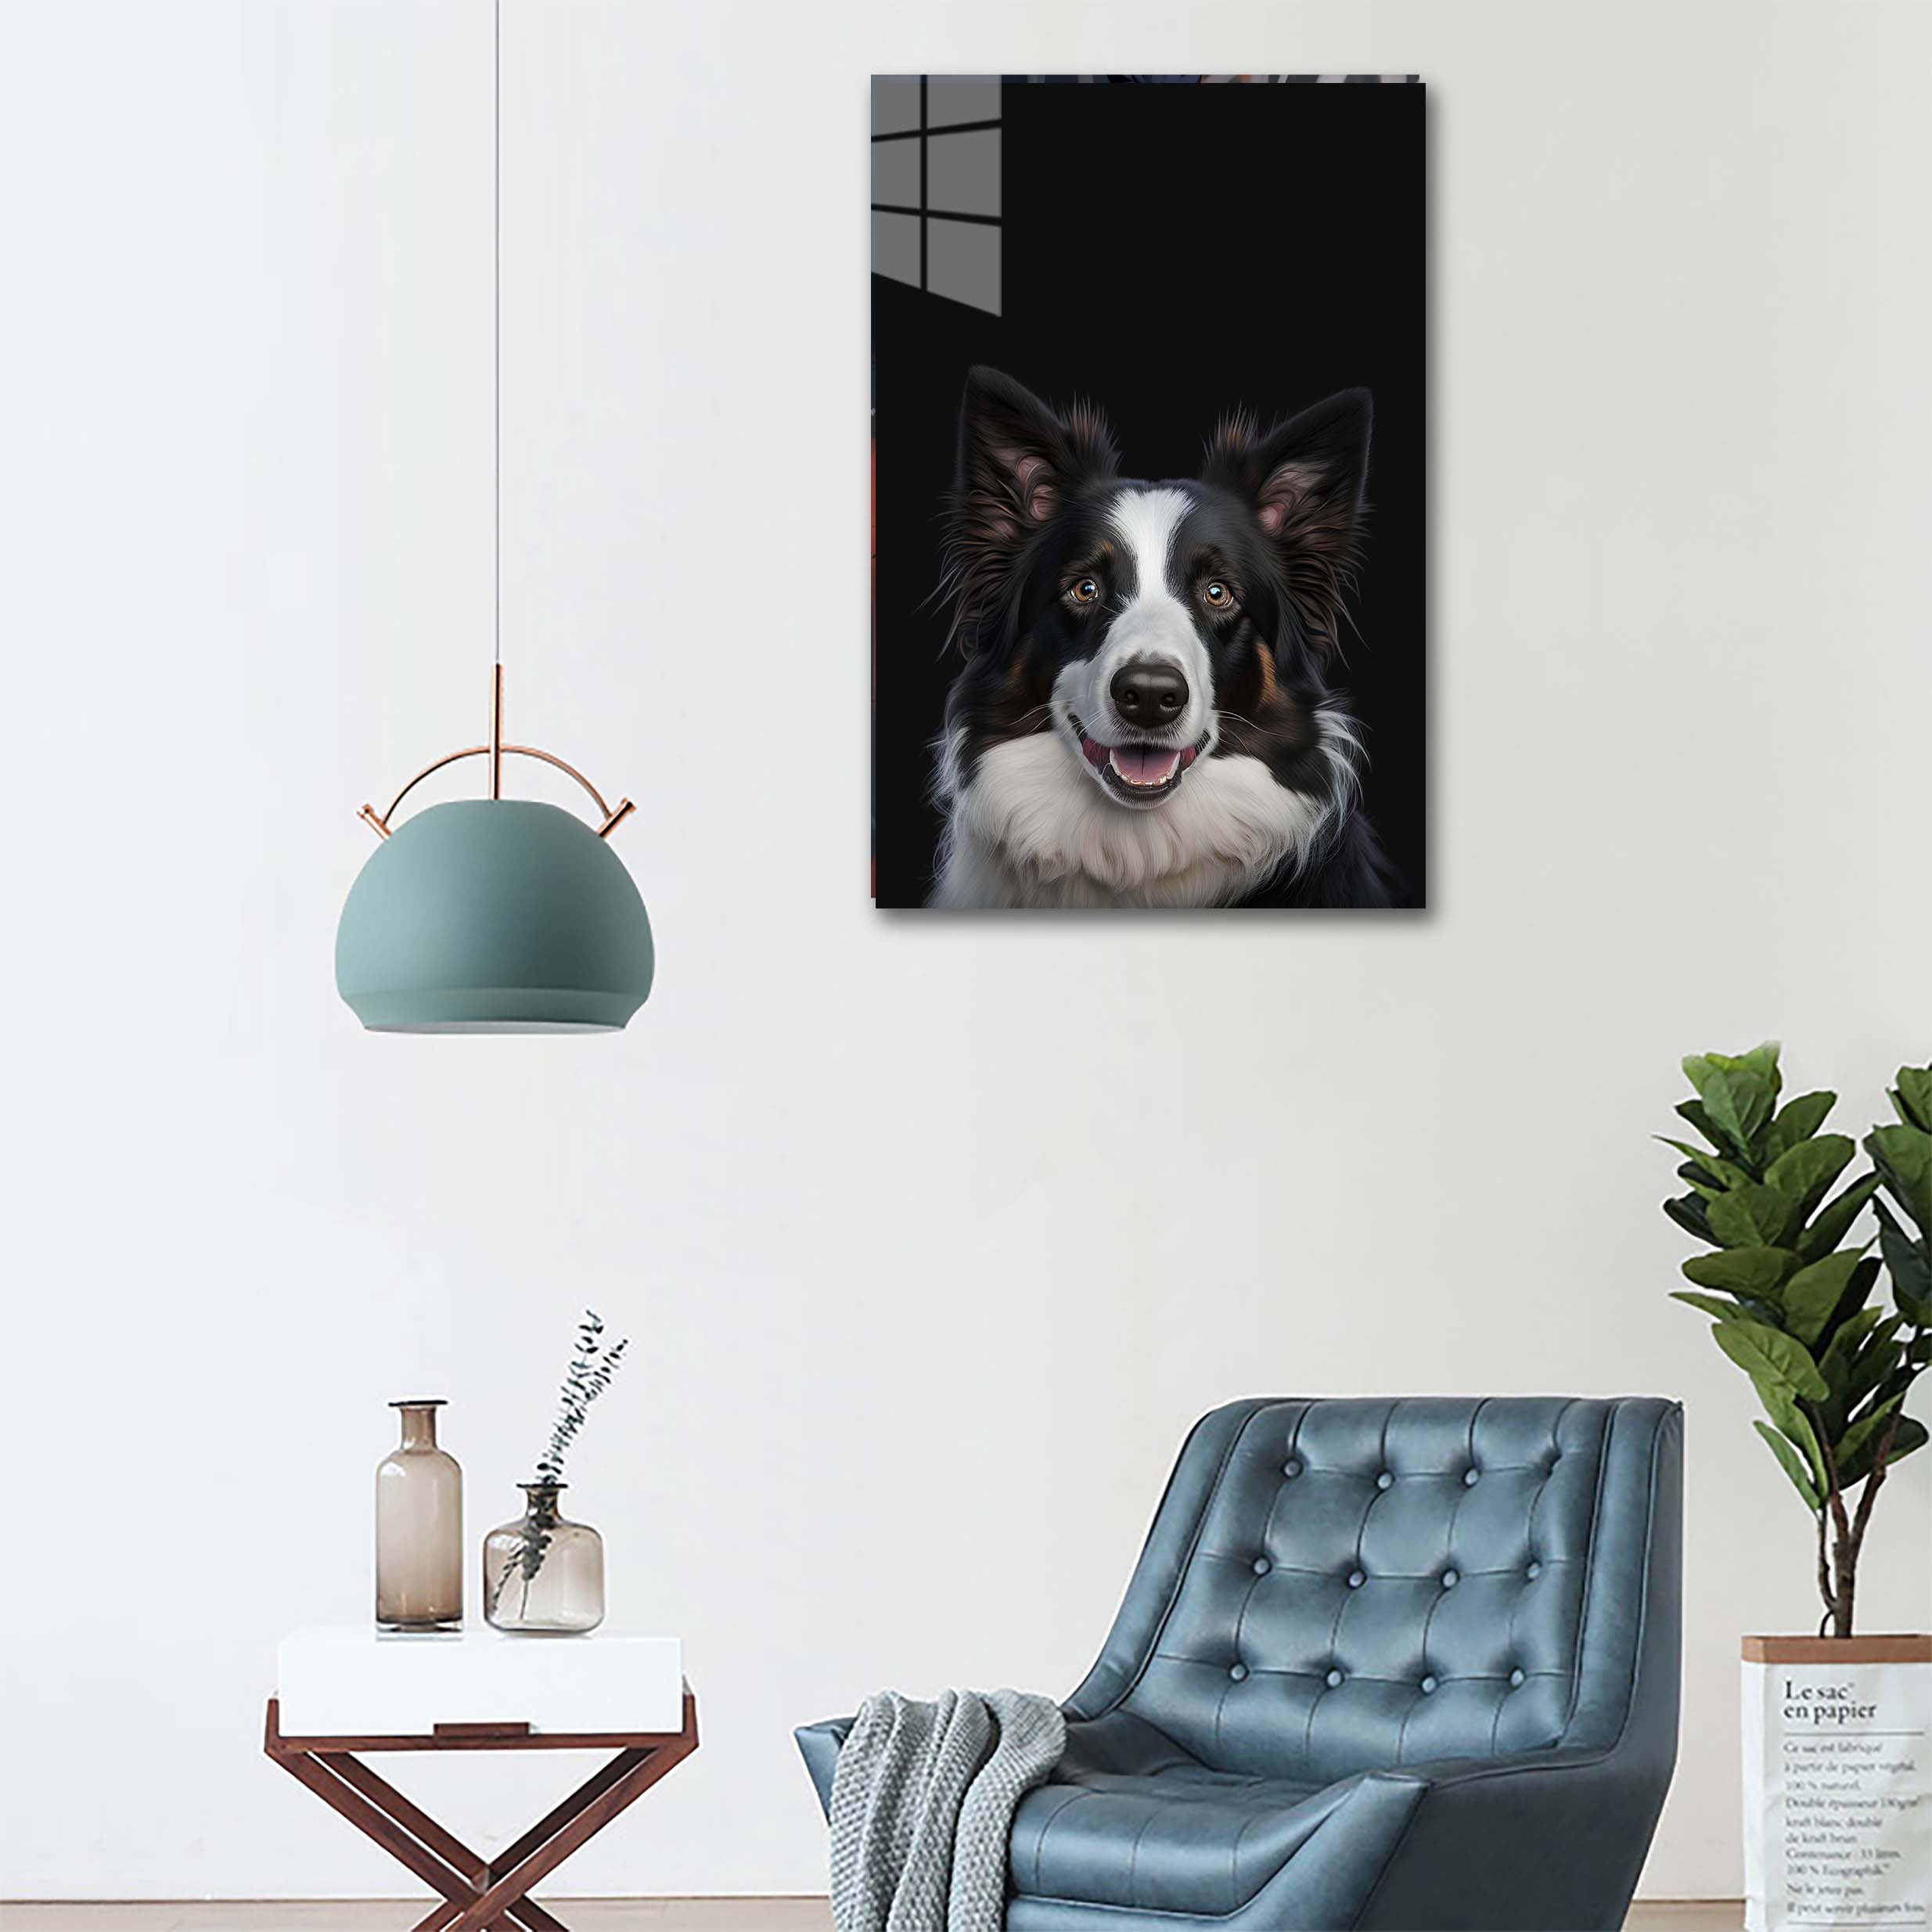 Funny border collie dog-Artwork by @VICKY